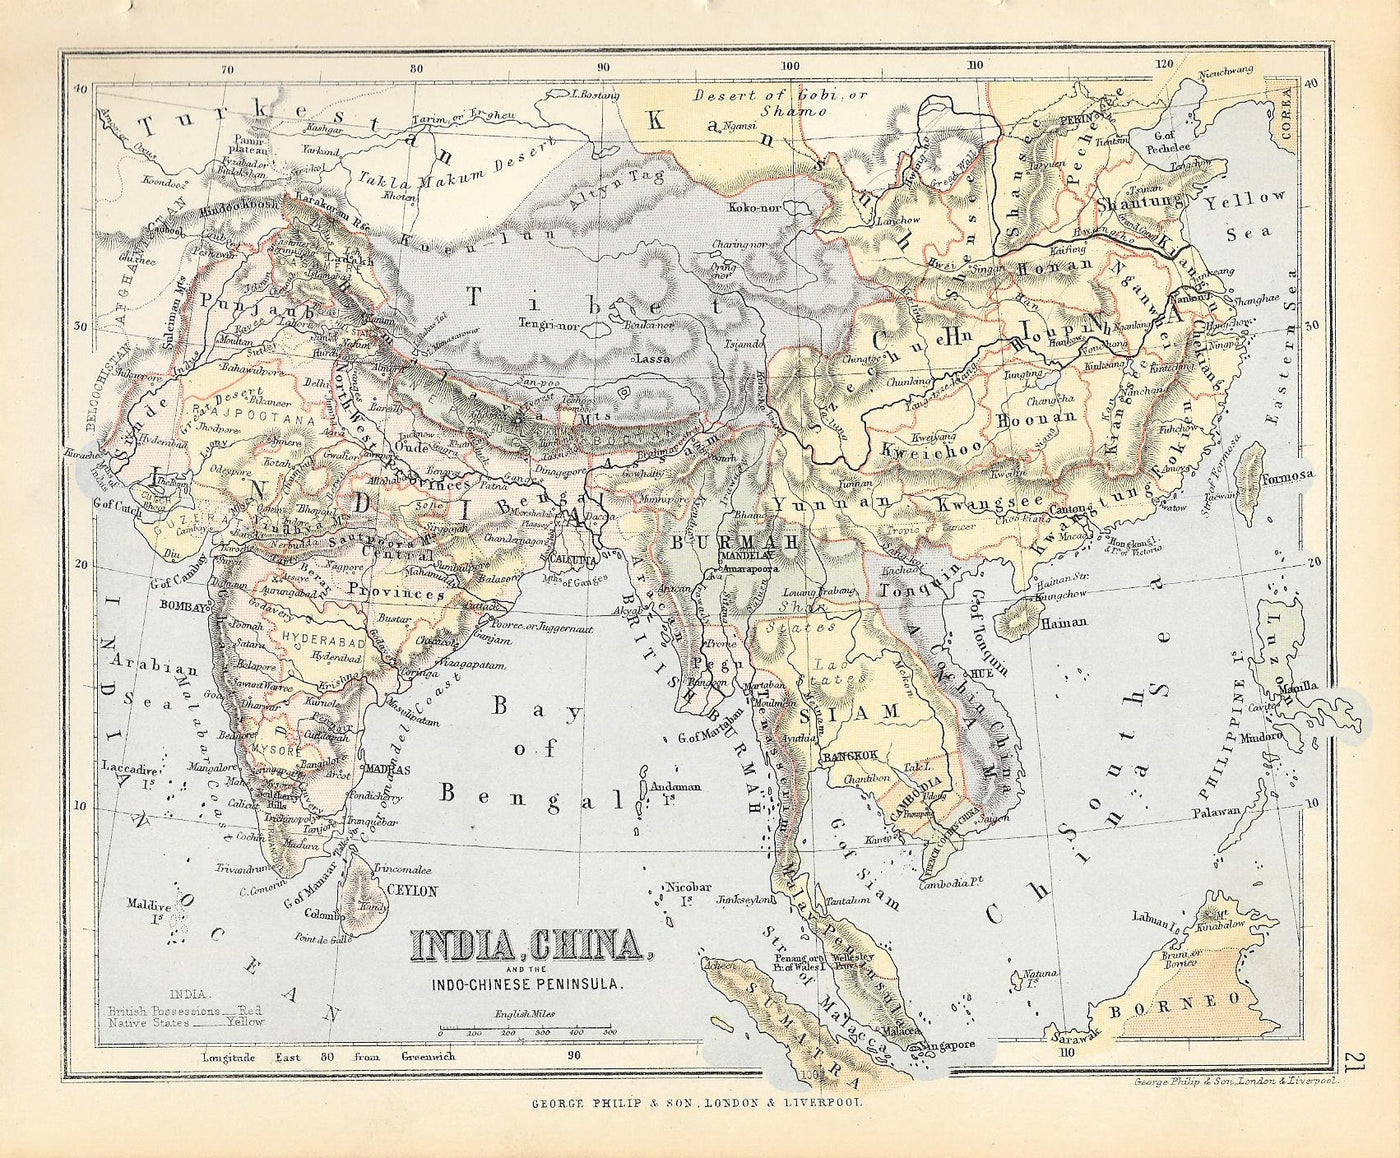 India China antique map